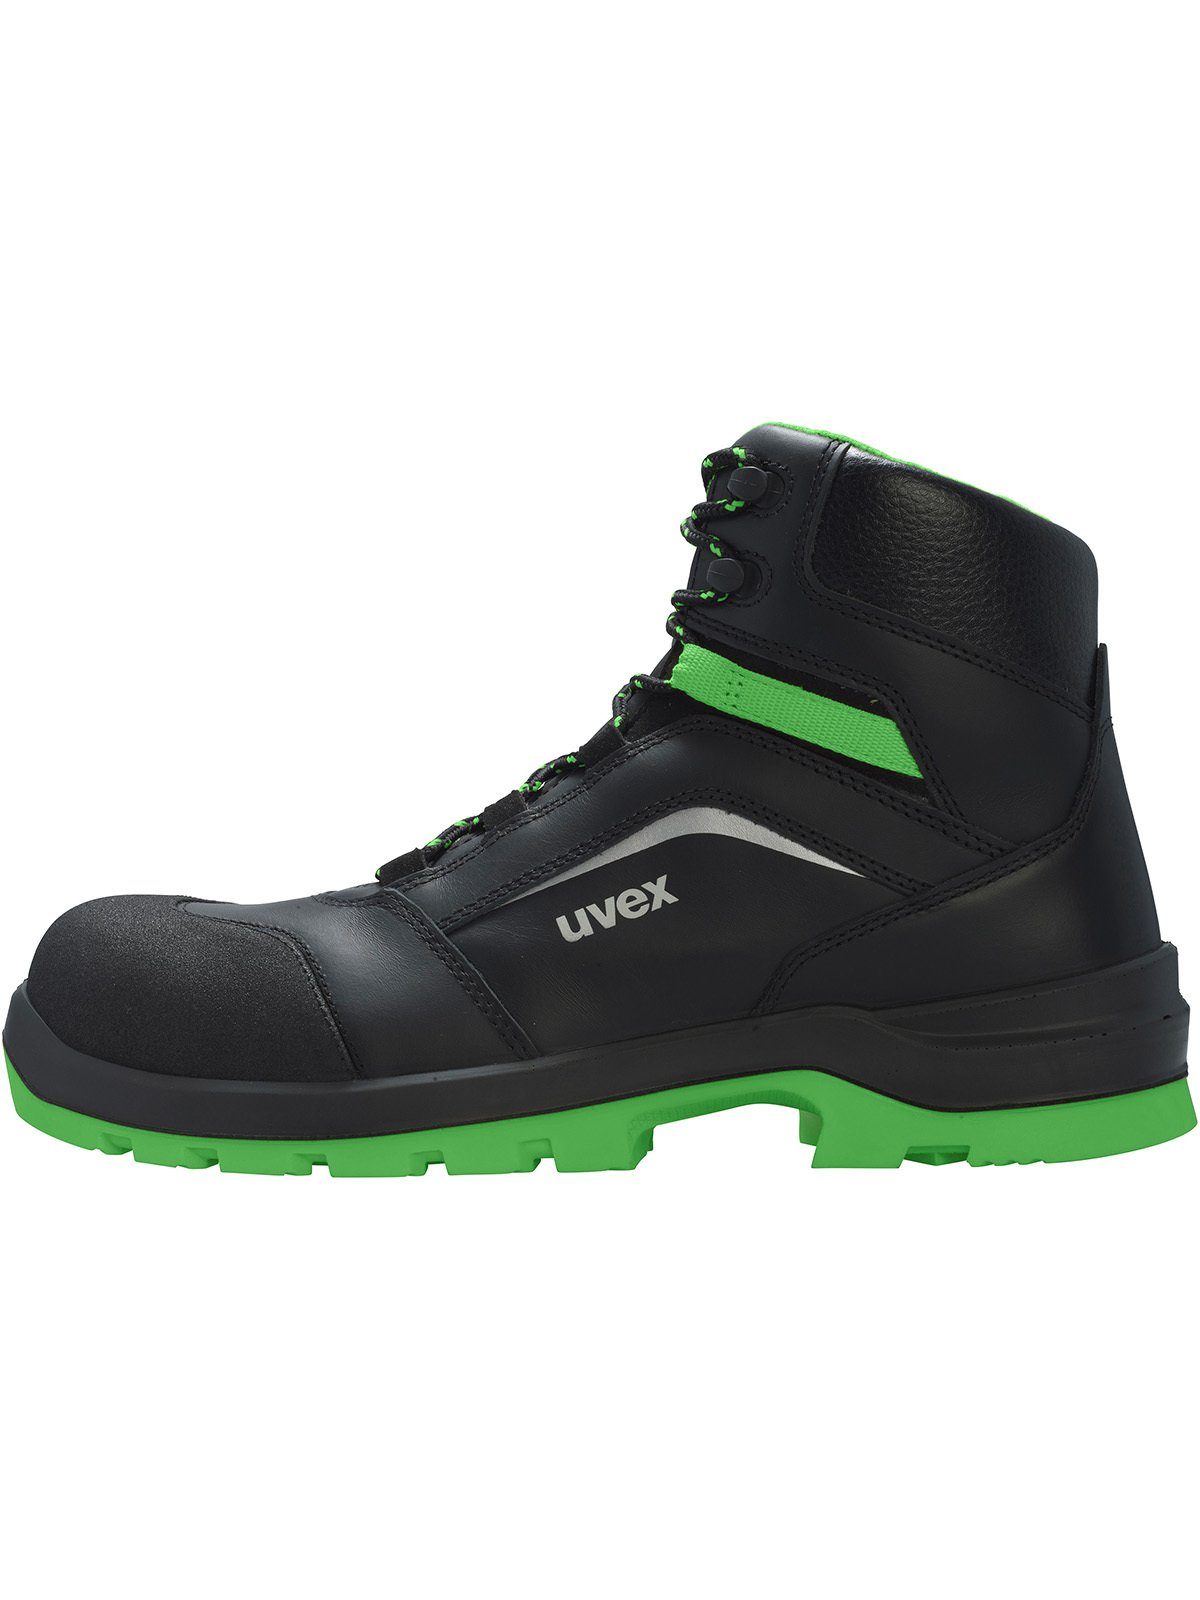 Uvex uvex 2 xenova® S3 Stiefel Stiefel SRC